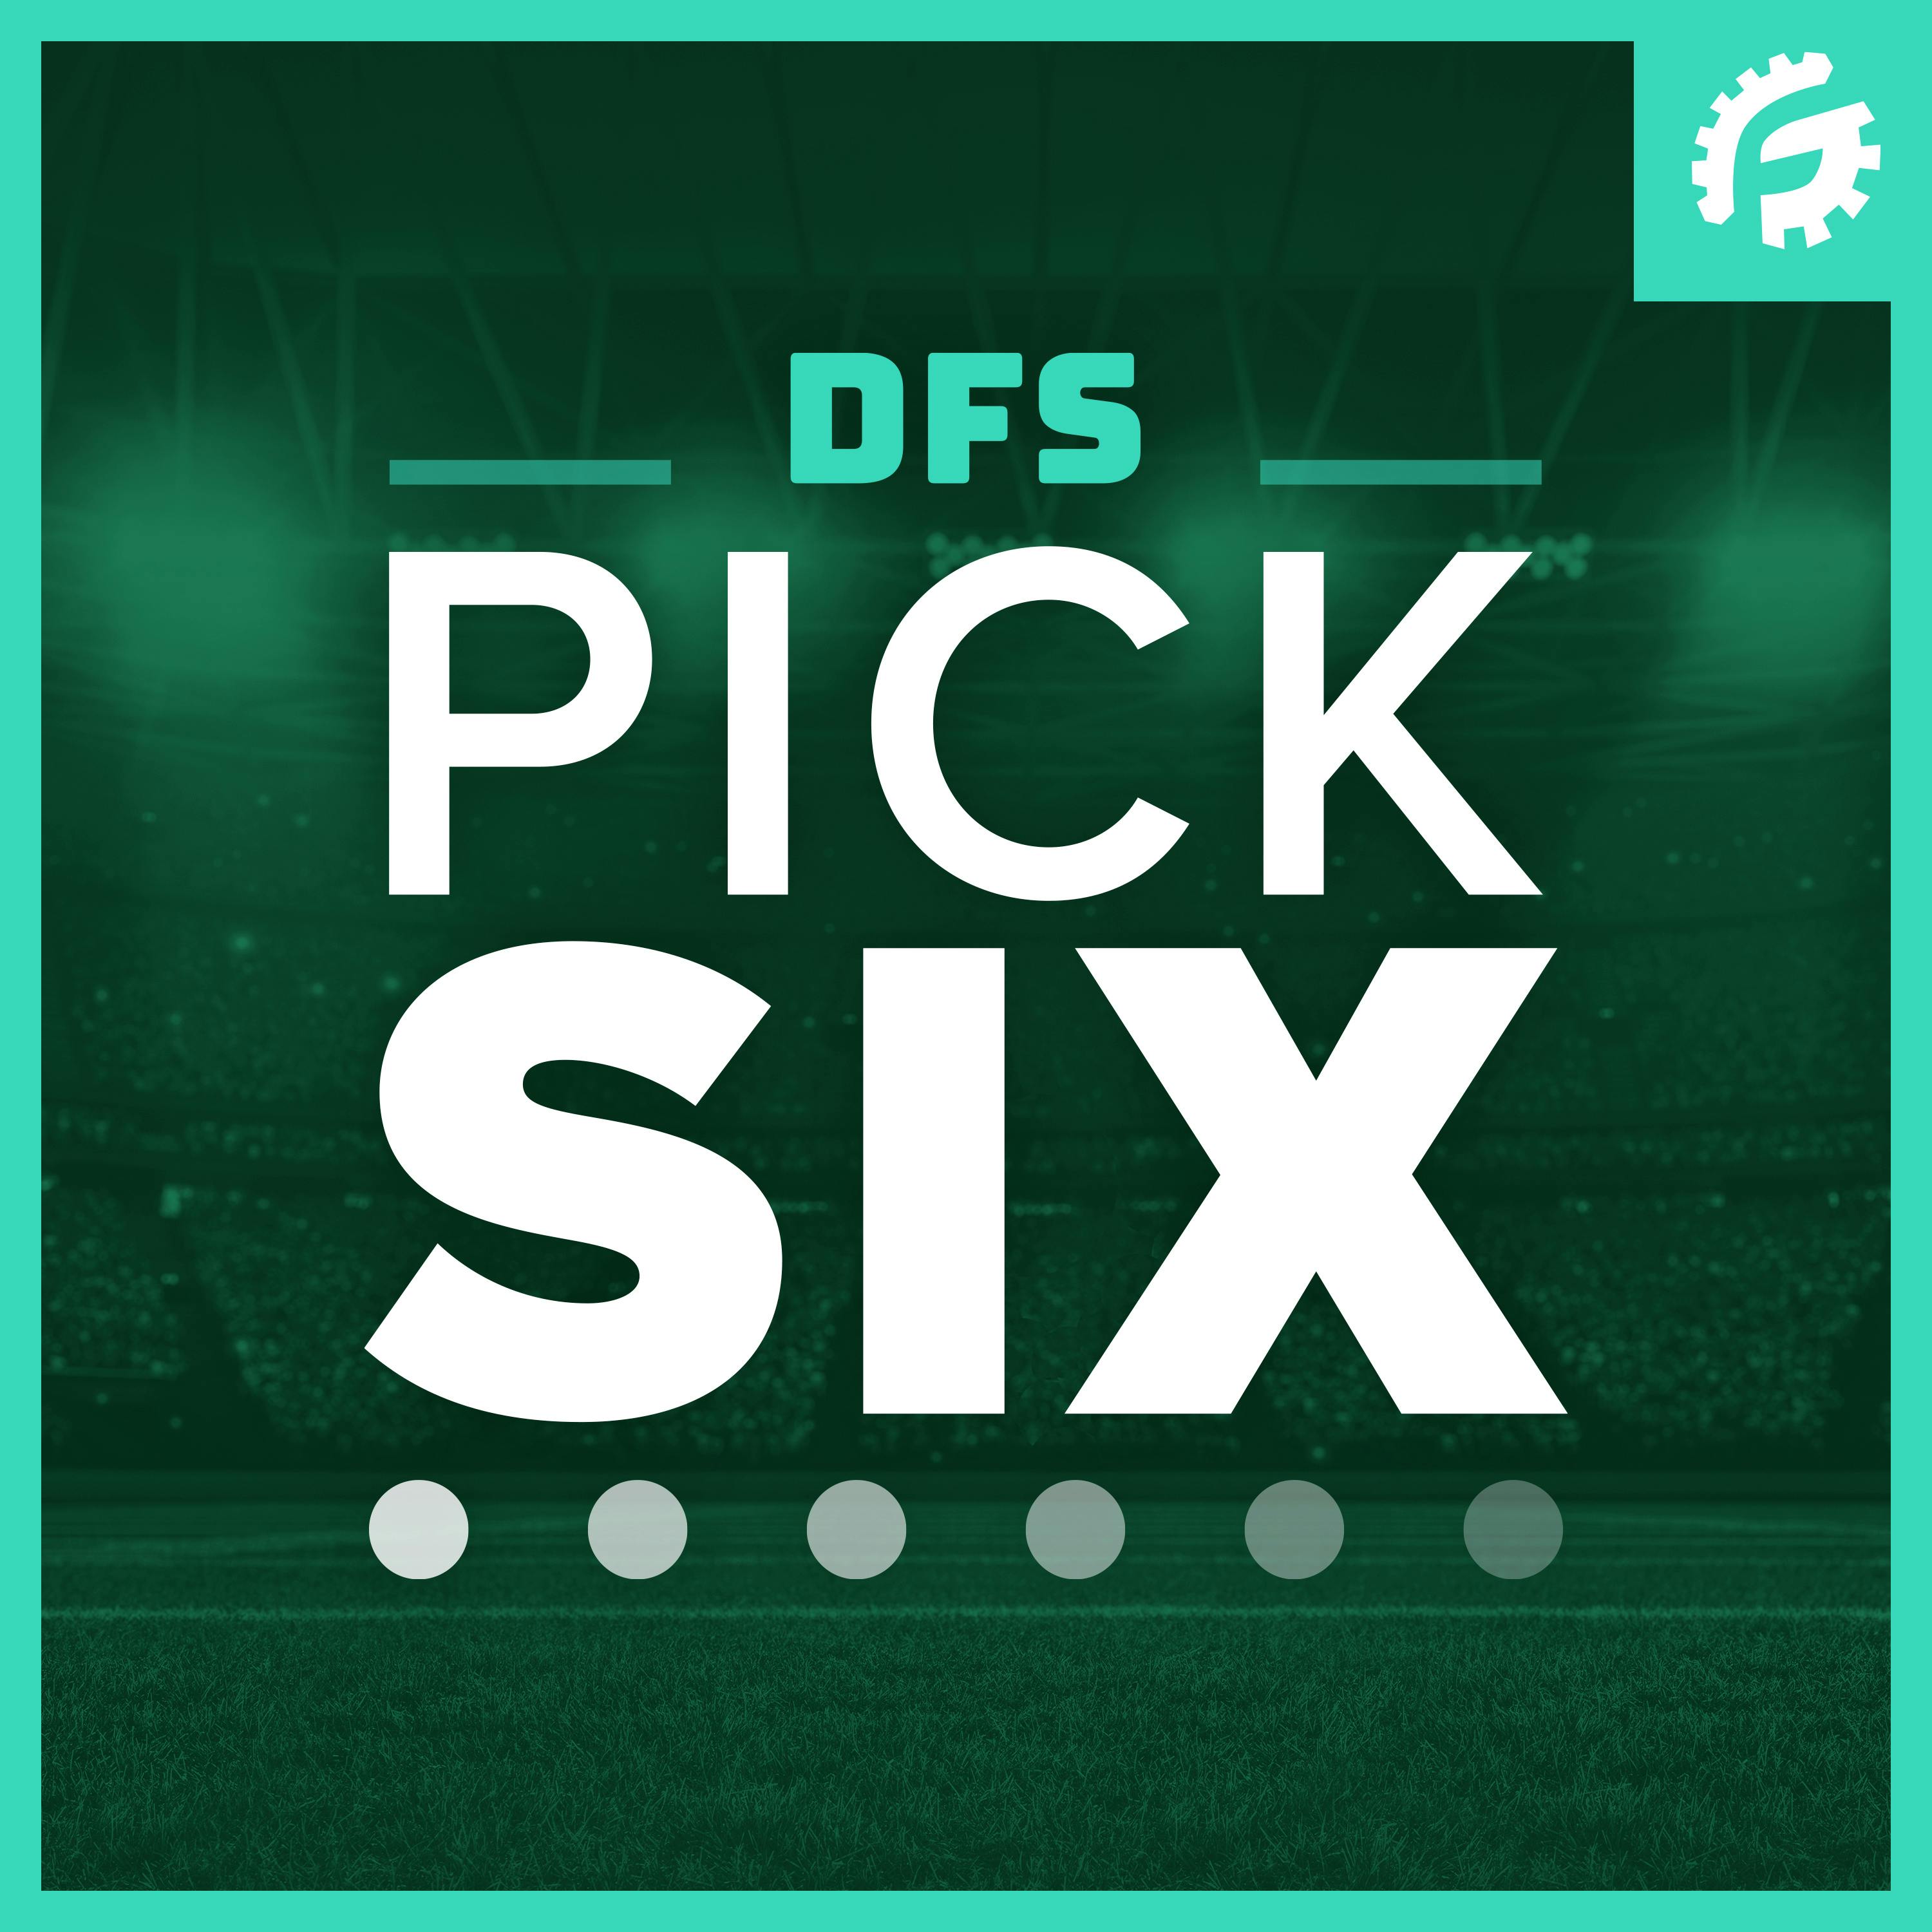 NFL DFS Pick 6 Show - Week 9